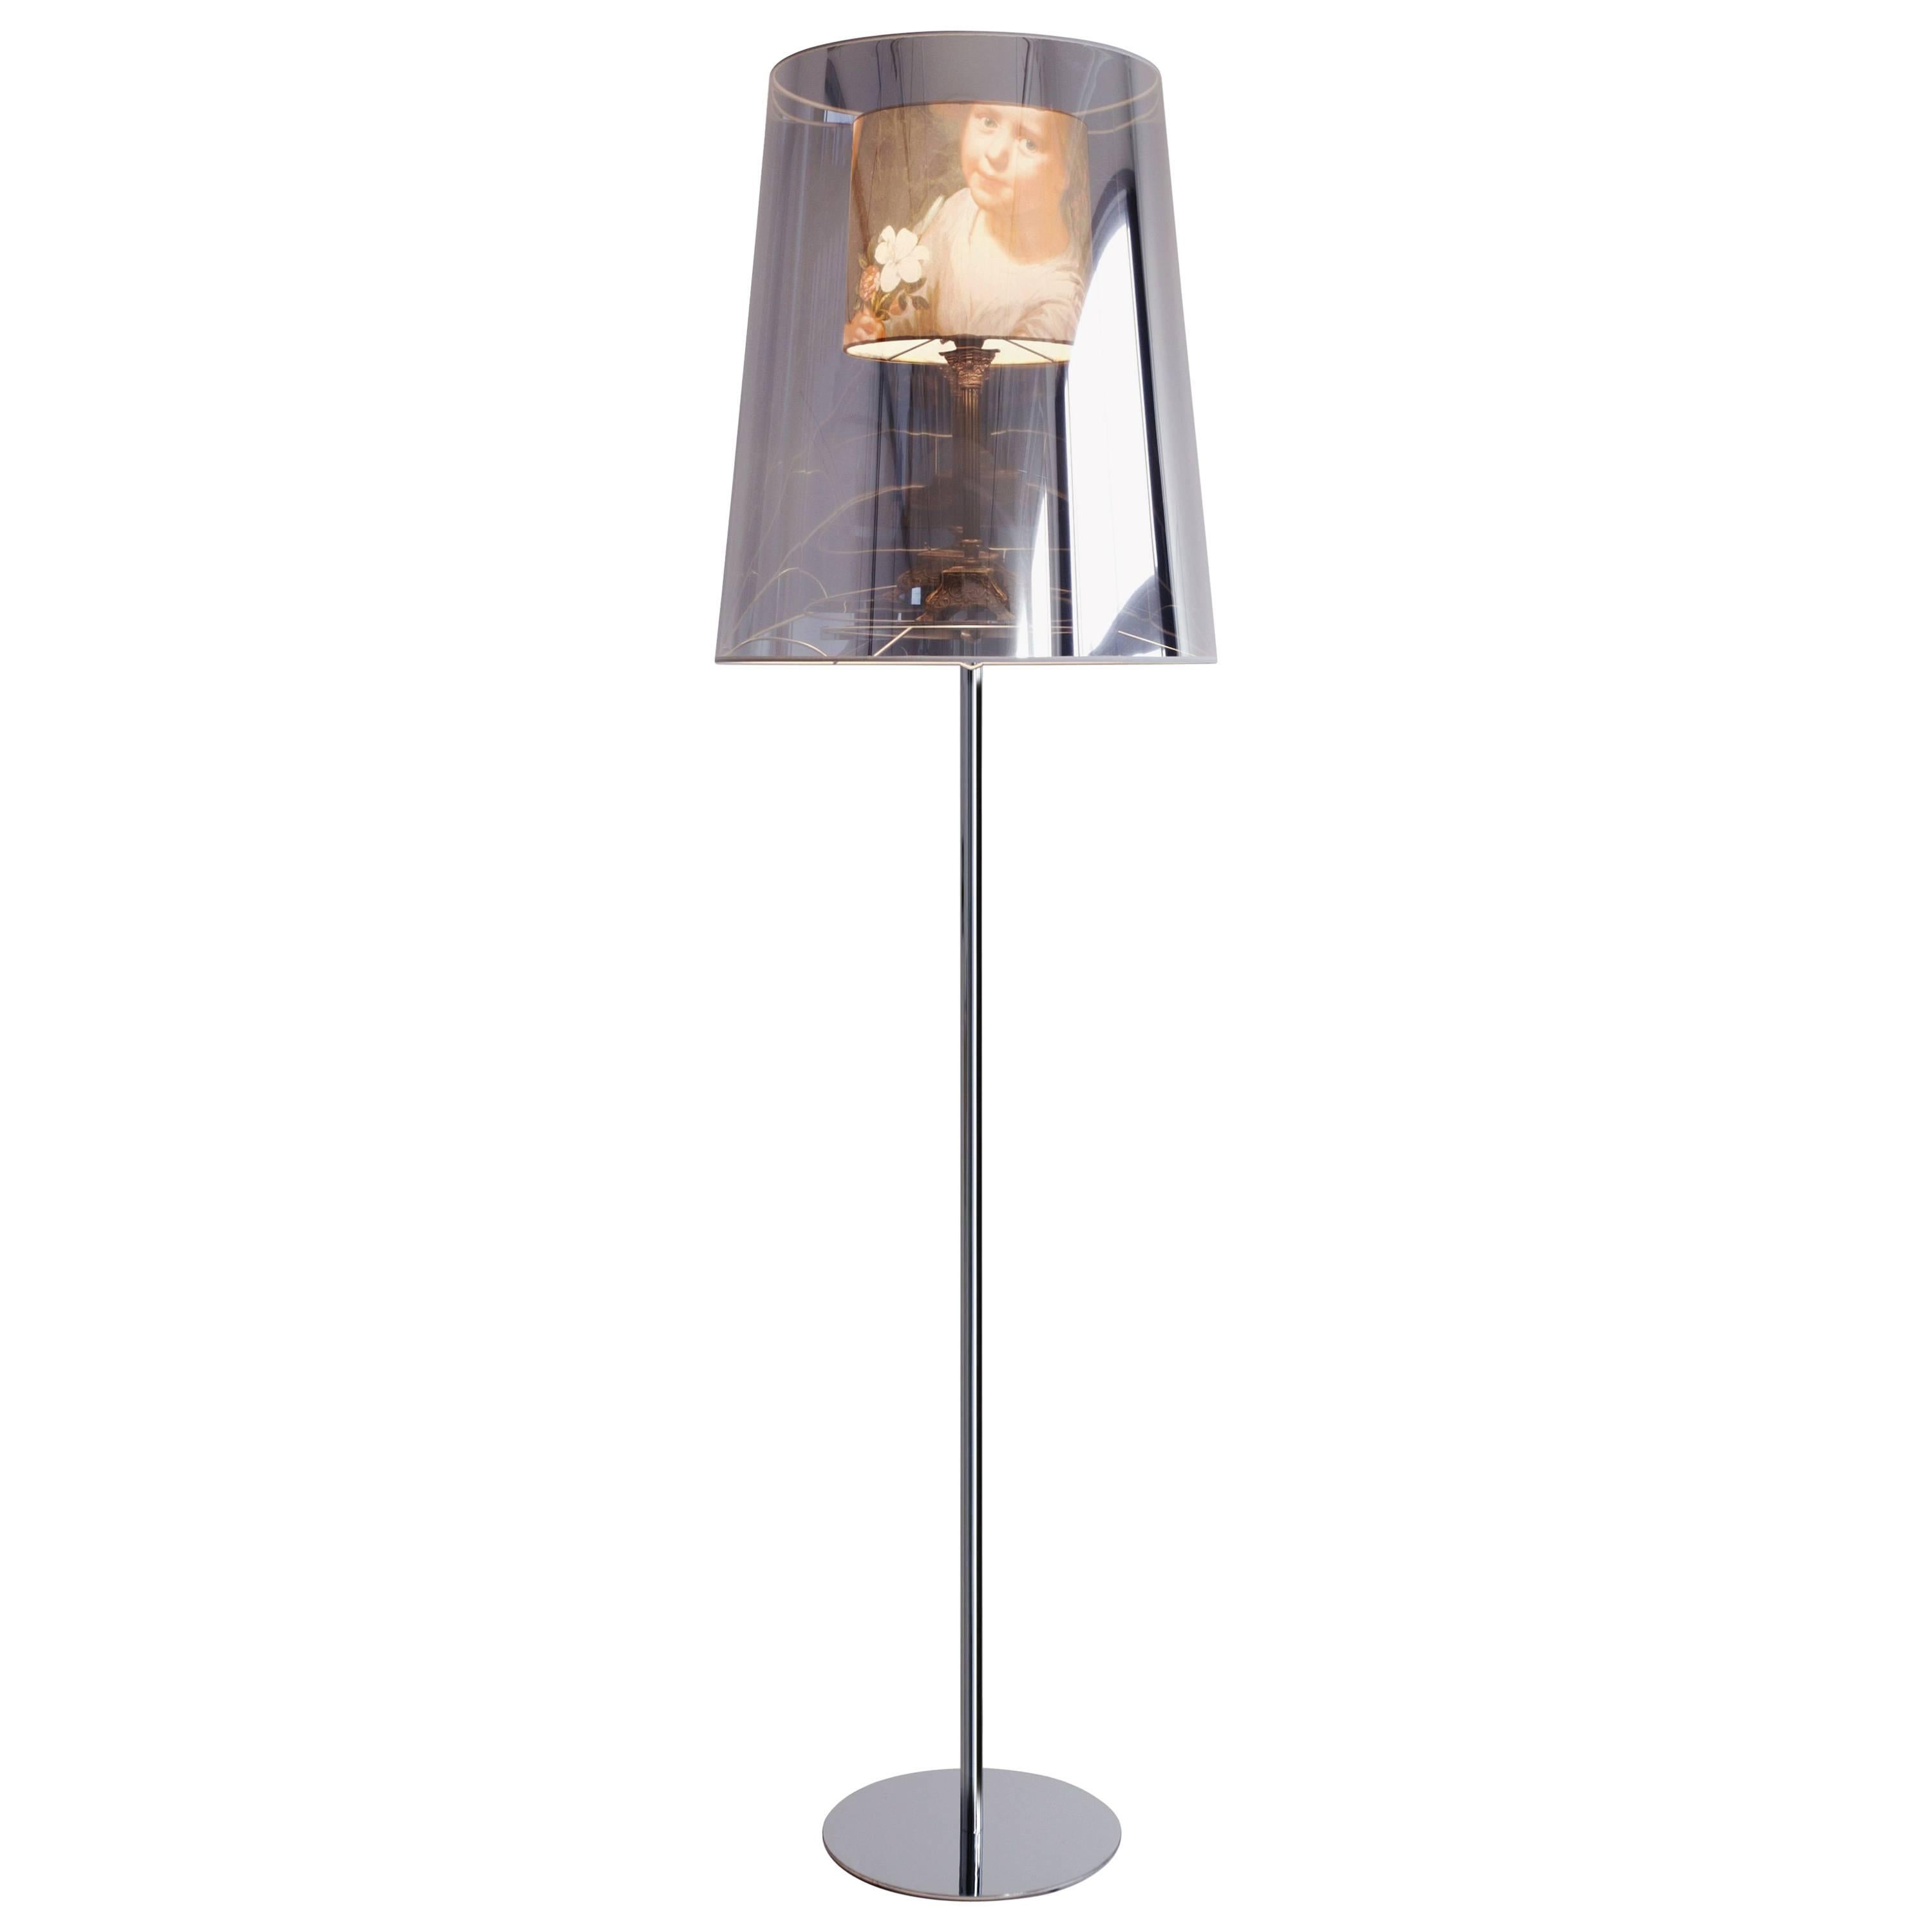 Moooi Light Shade Shade Floor Lamp by Jurgen Bey For Sale